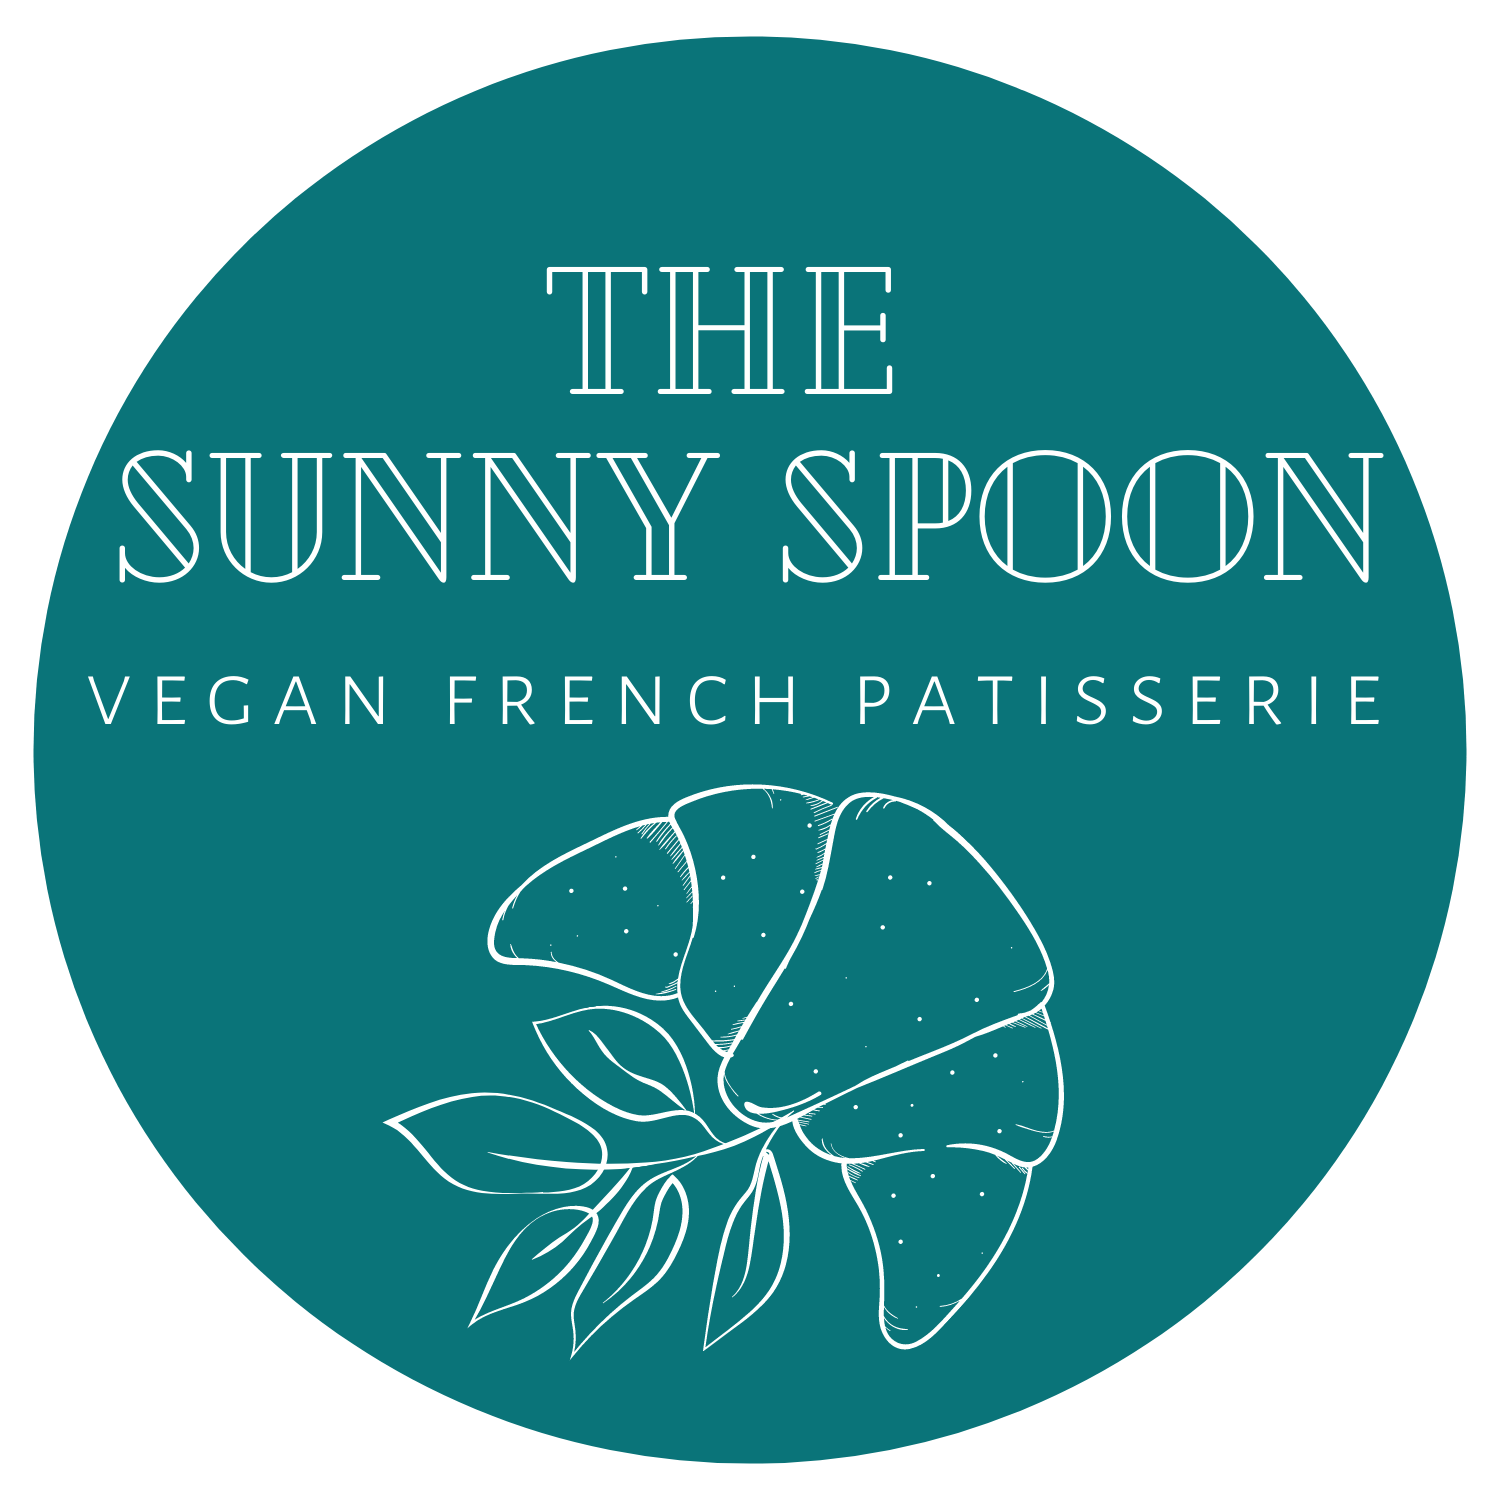 The Sunny Spoon